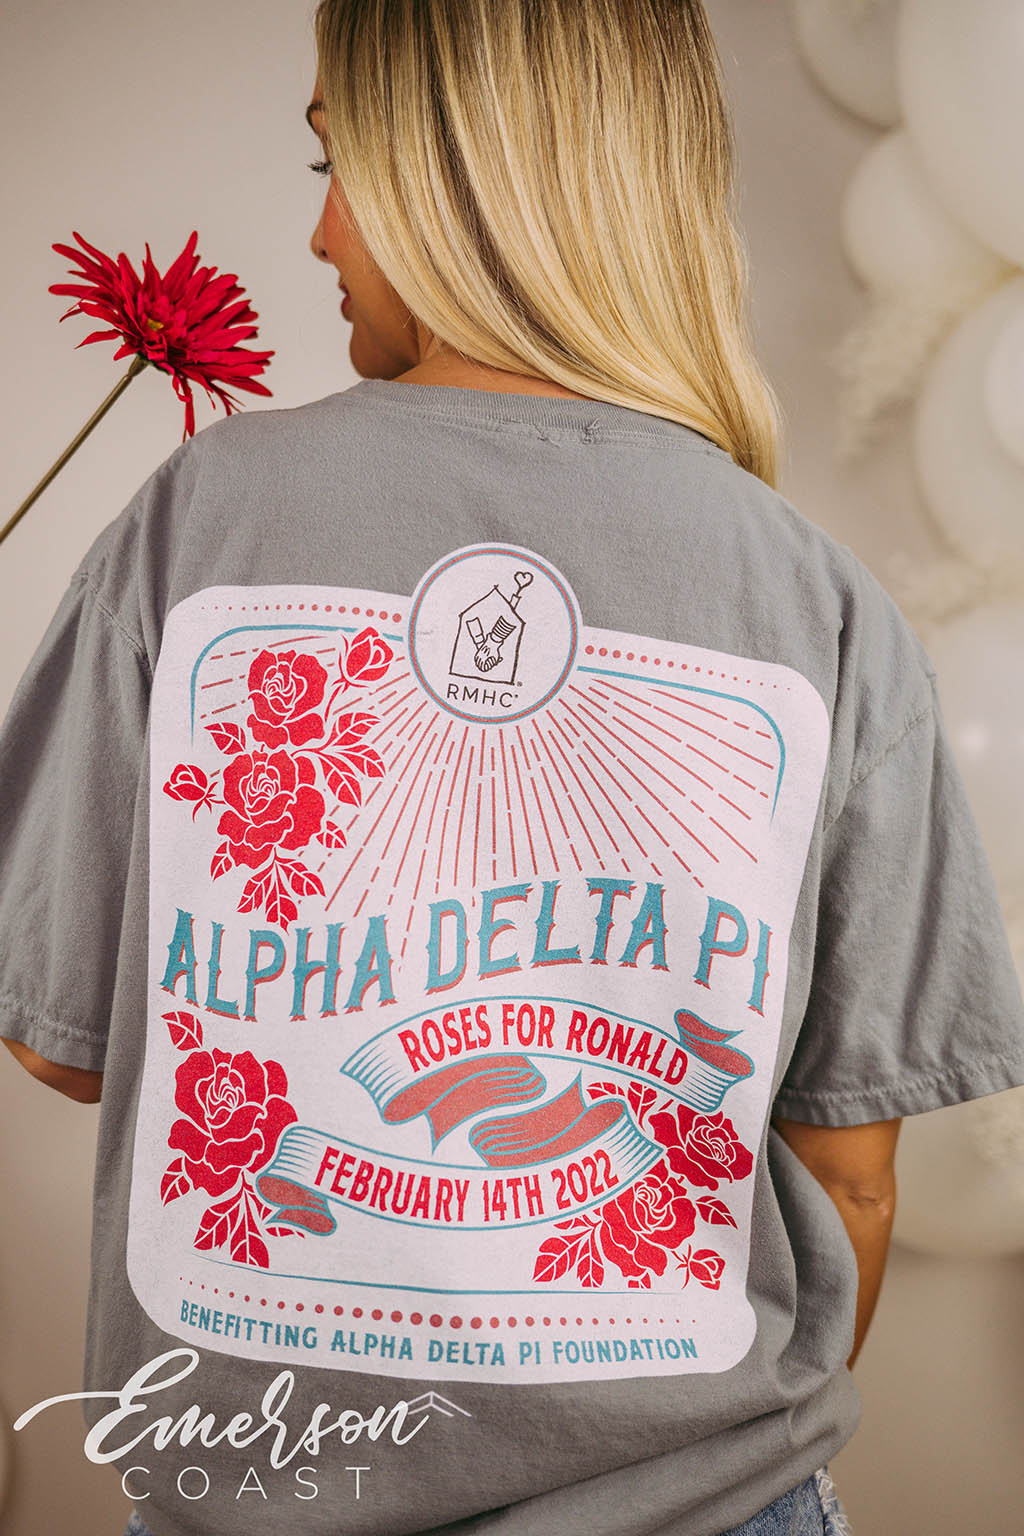 Alpha Delta Pi Philanthropy Roses for Ronald Tee